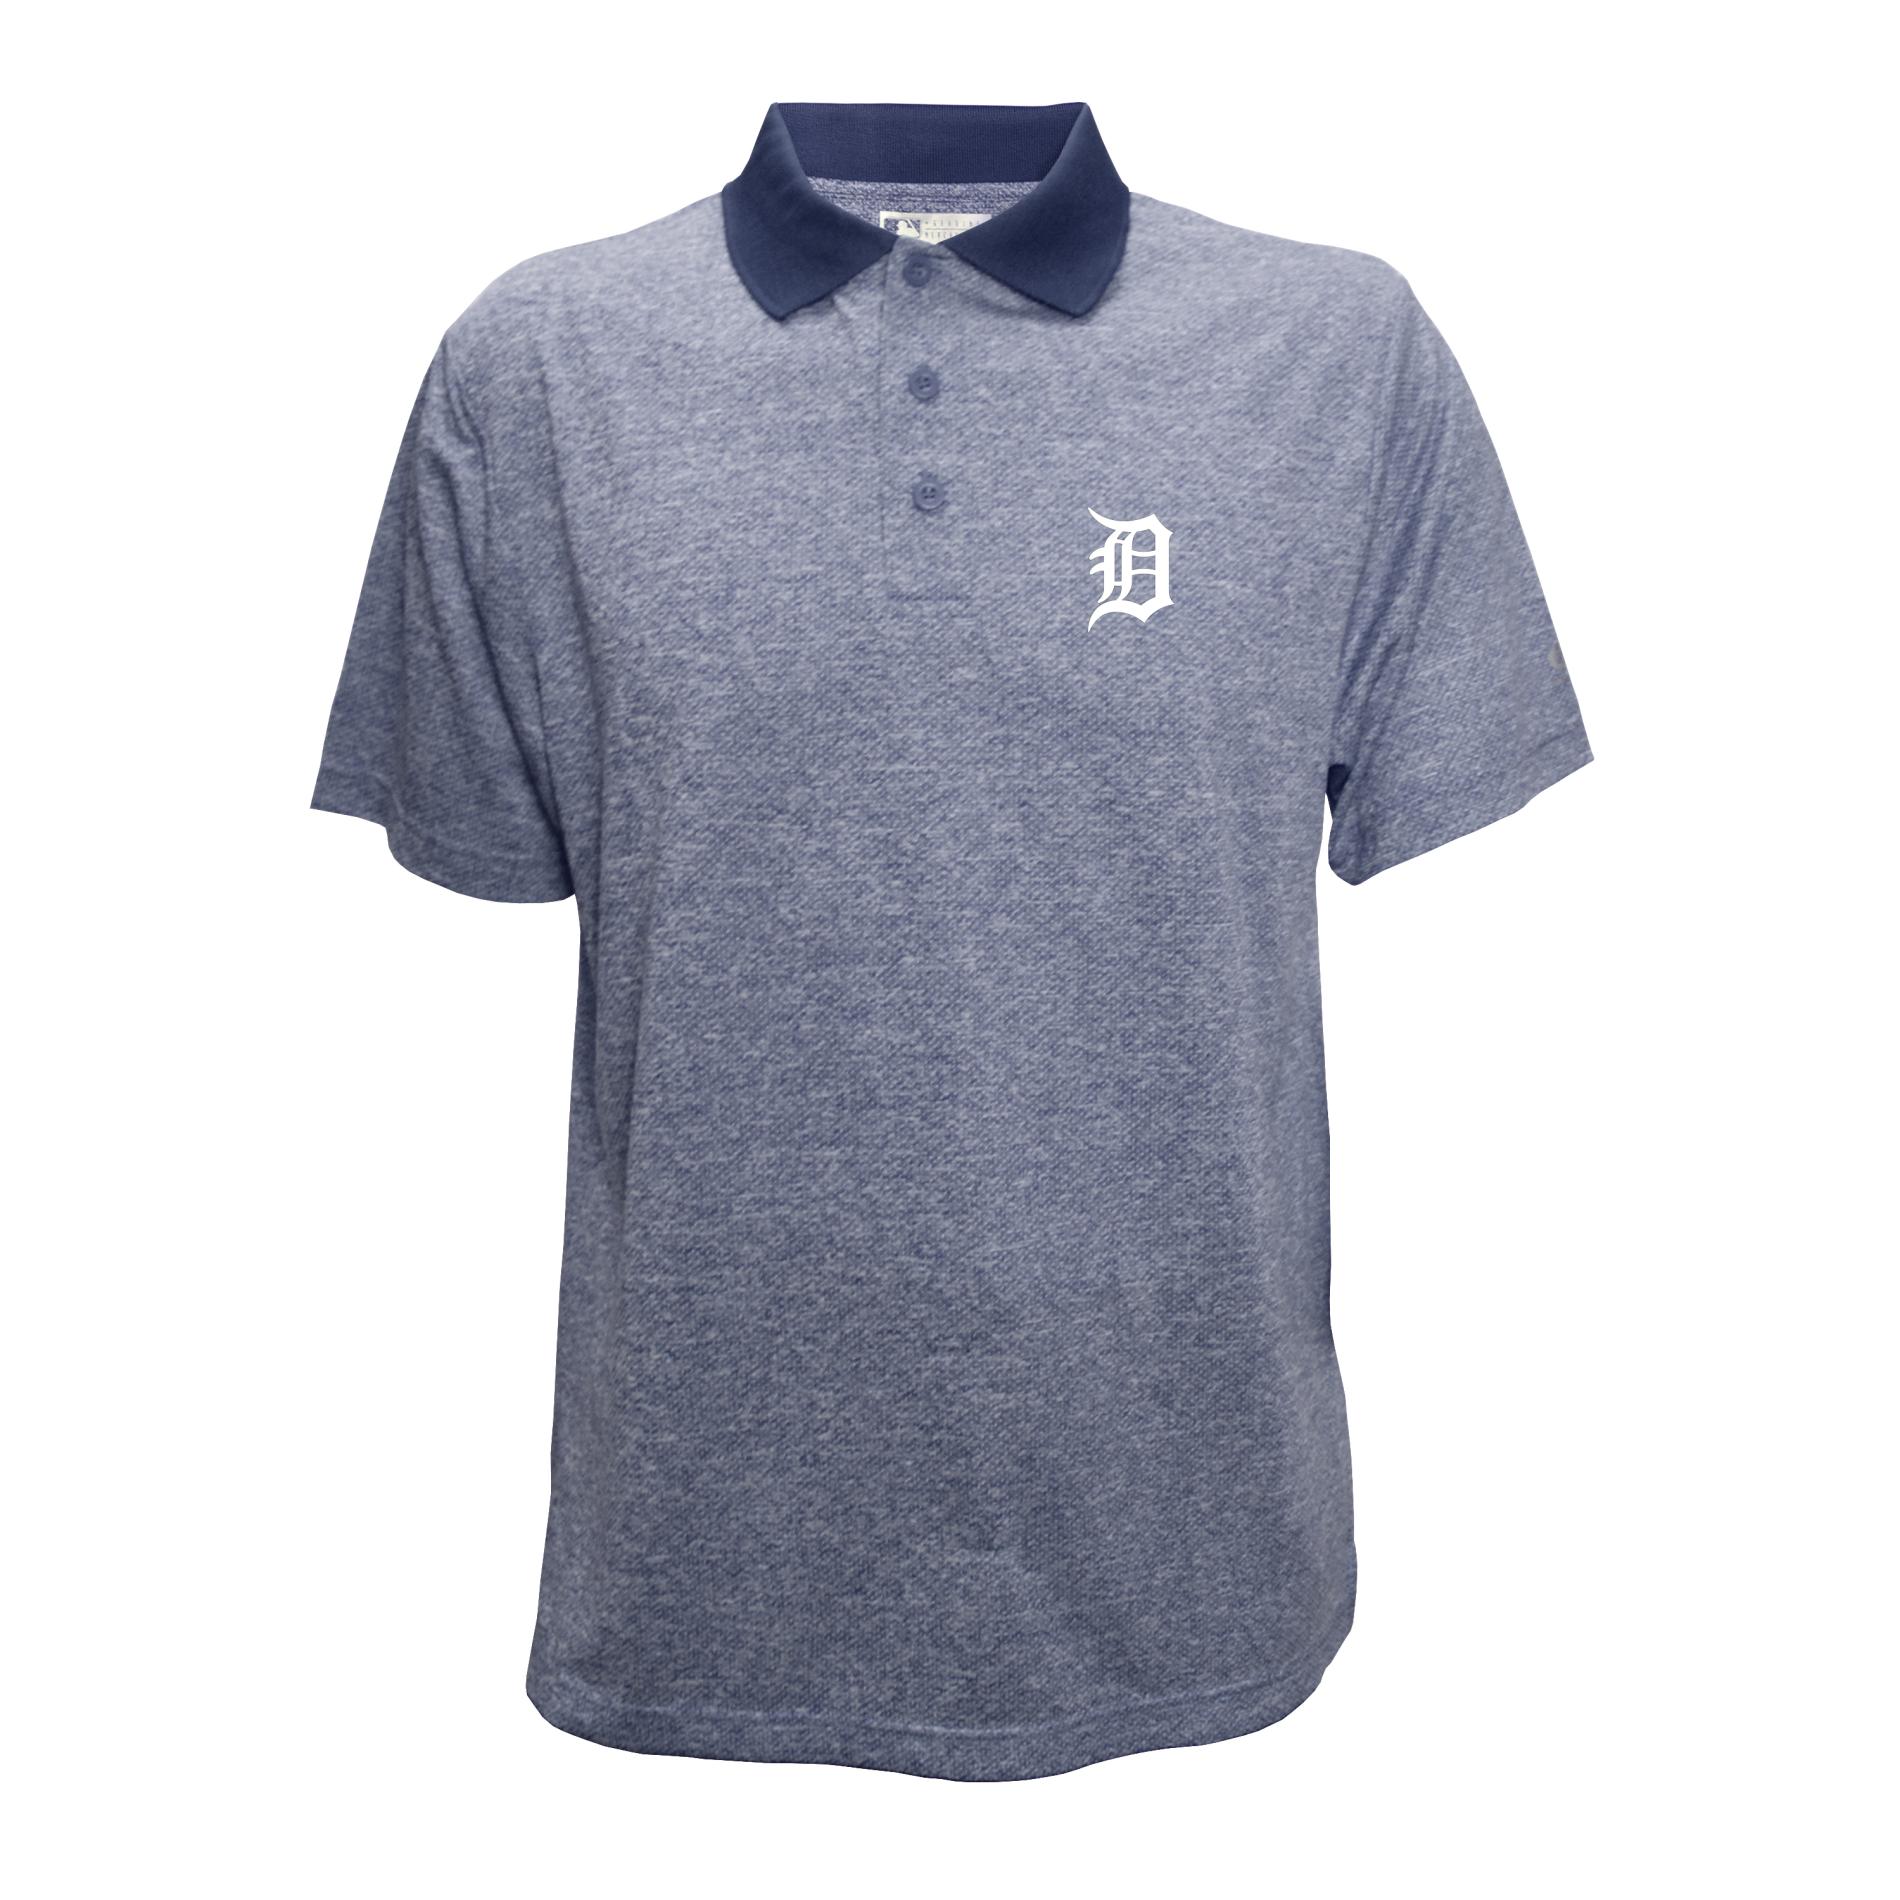 MLB Men's Polo Shirt - Detroit Tigers